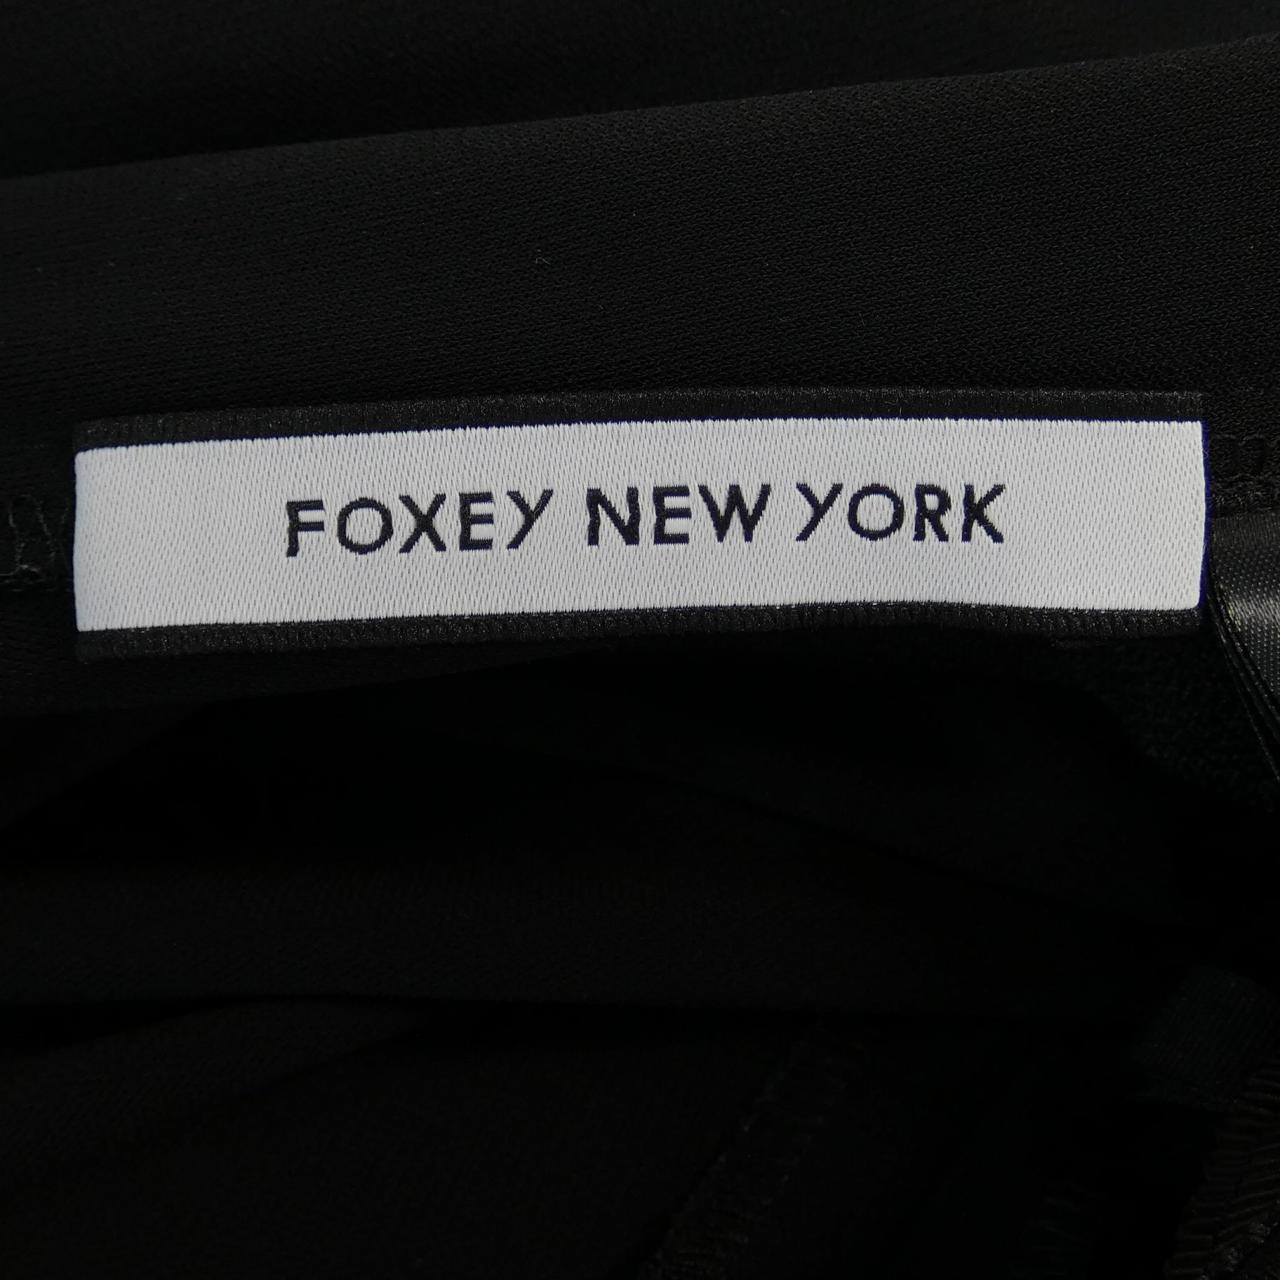 Foxy New York FOXEY NEW YORK pants